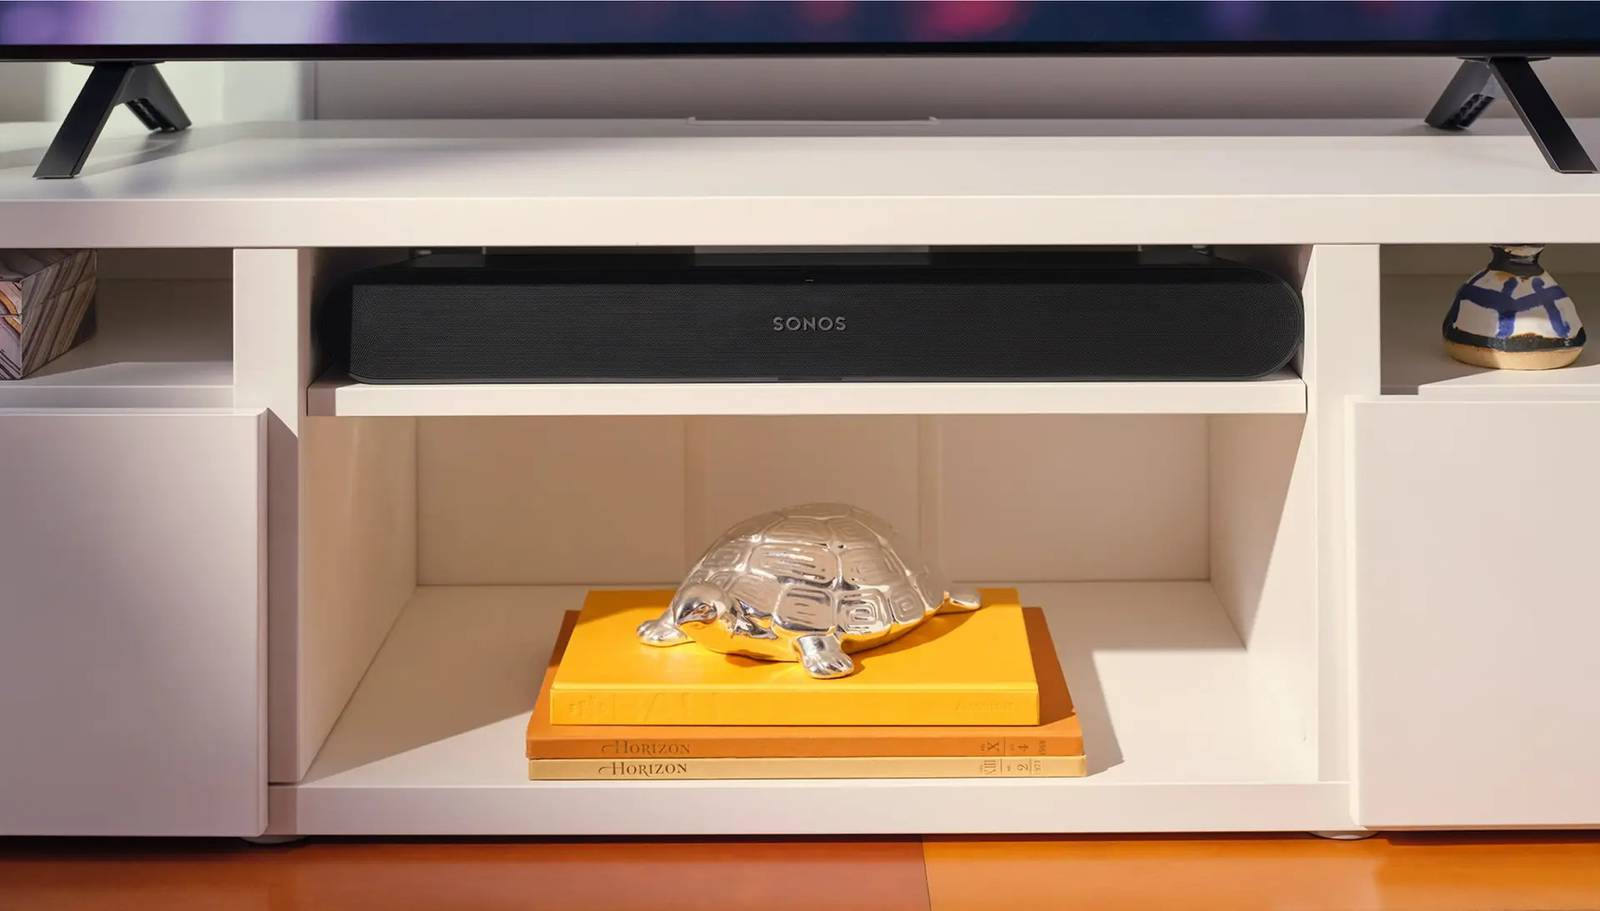 The Sonos Ray 3 speaker beneath a TV